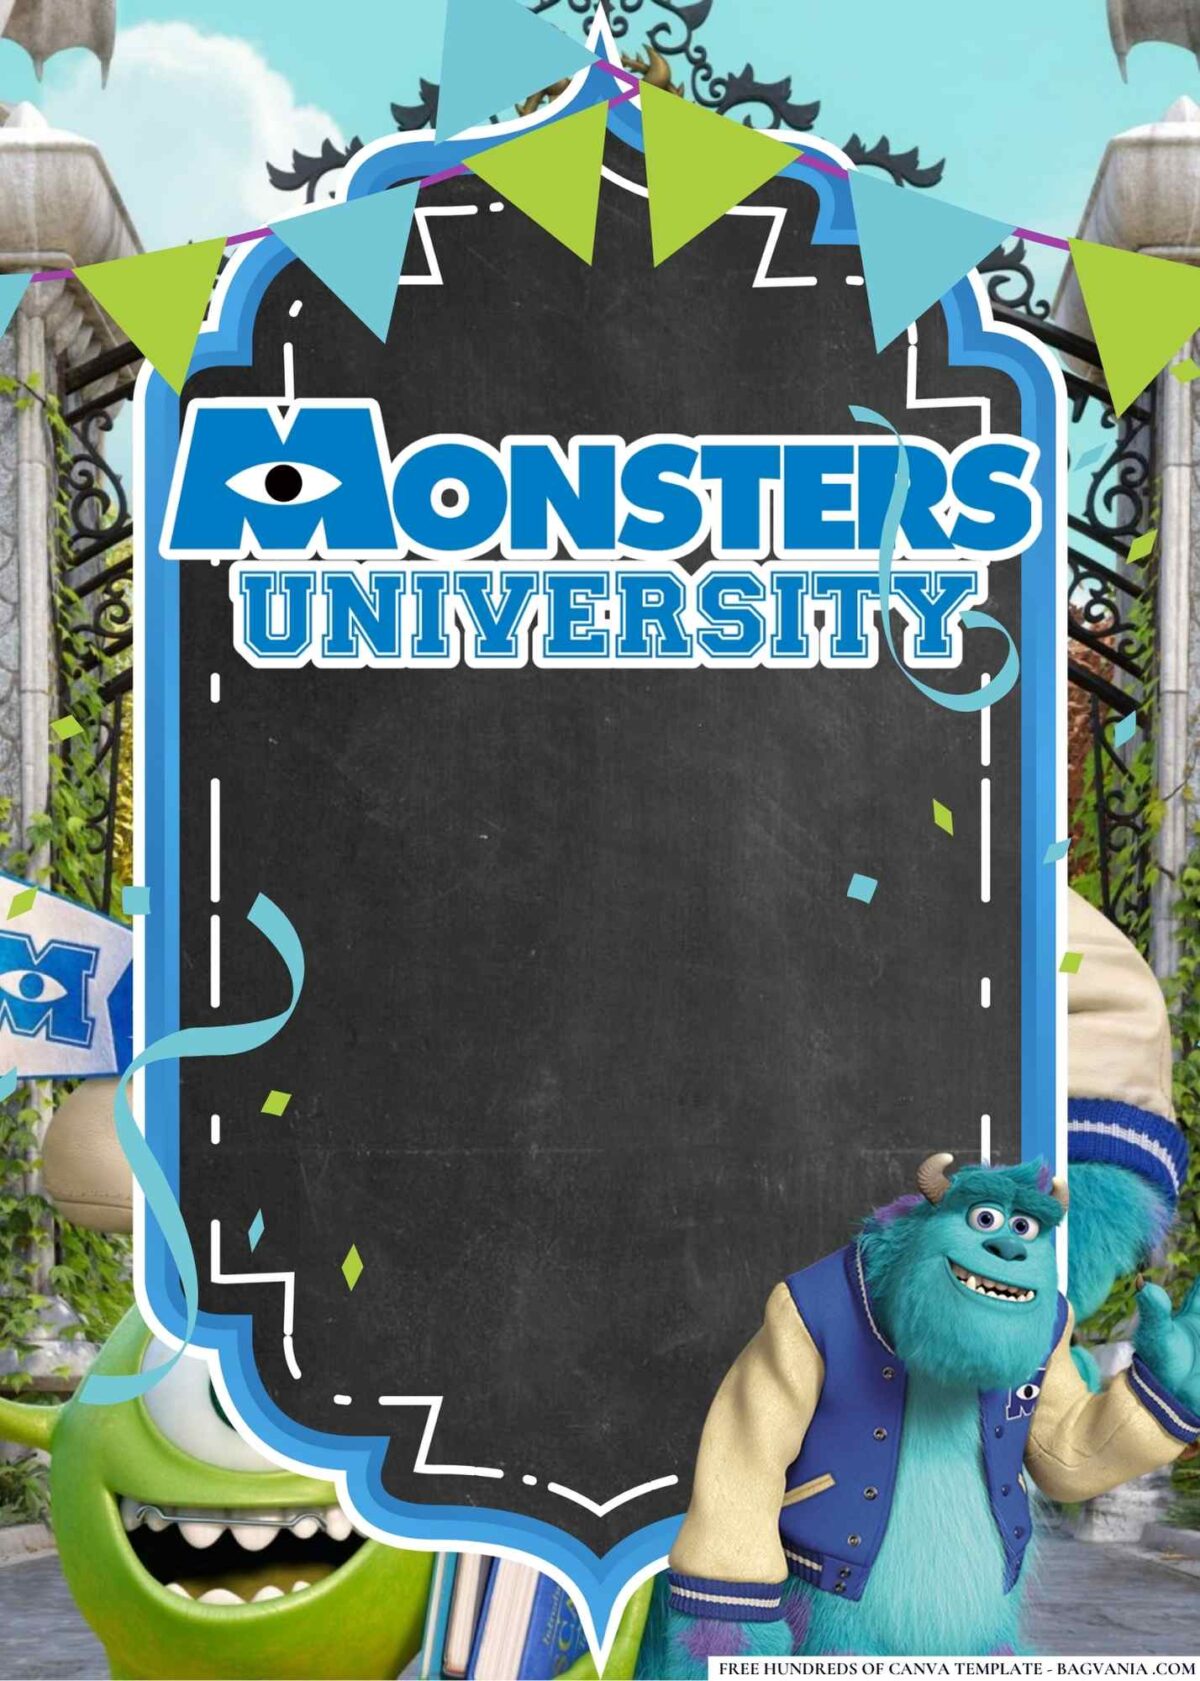 FREE Editable Monsters University Birthday Invitations